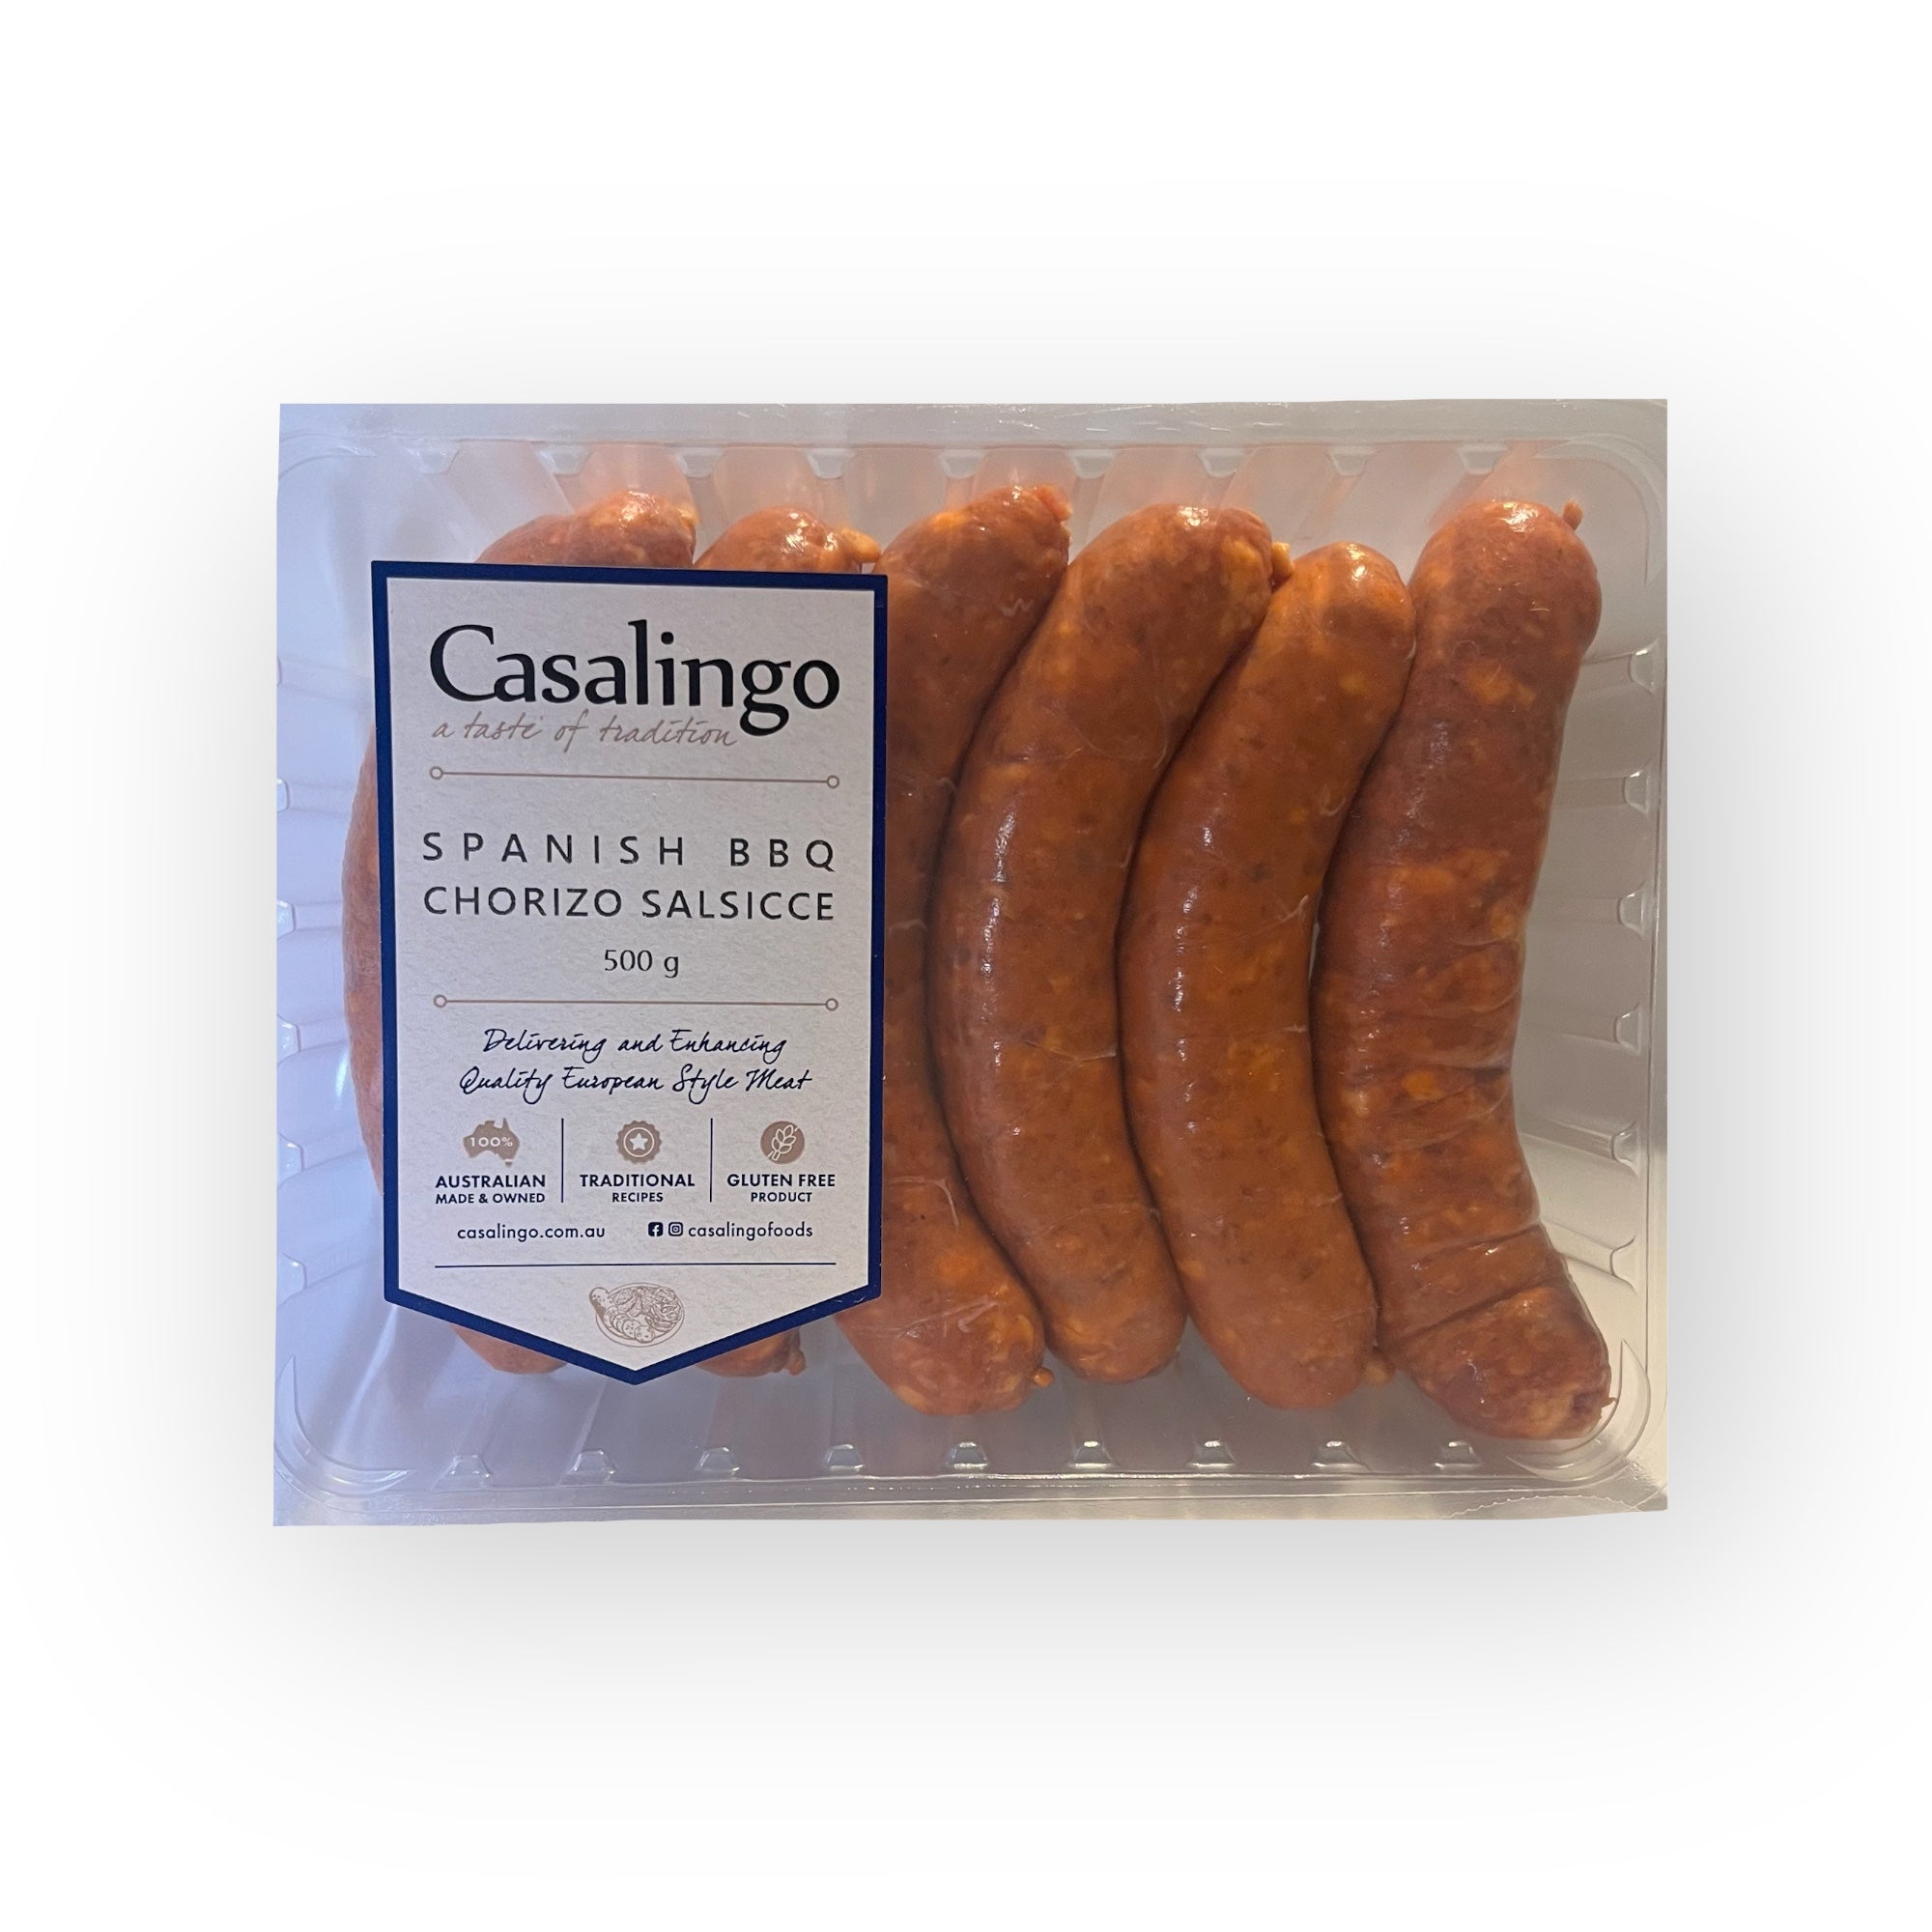 Casalingo Spanish BBQ Chorizo Sausage 500g